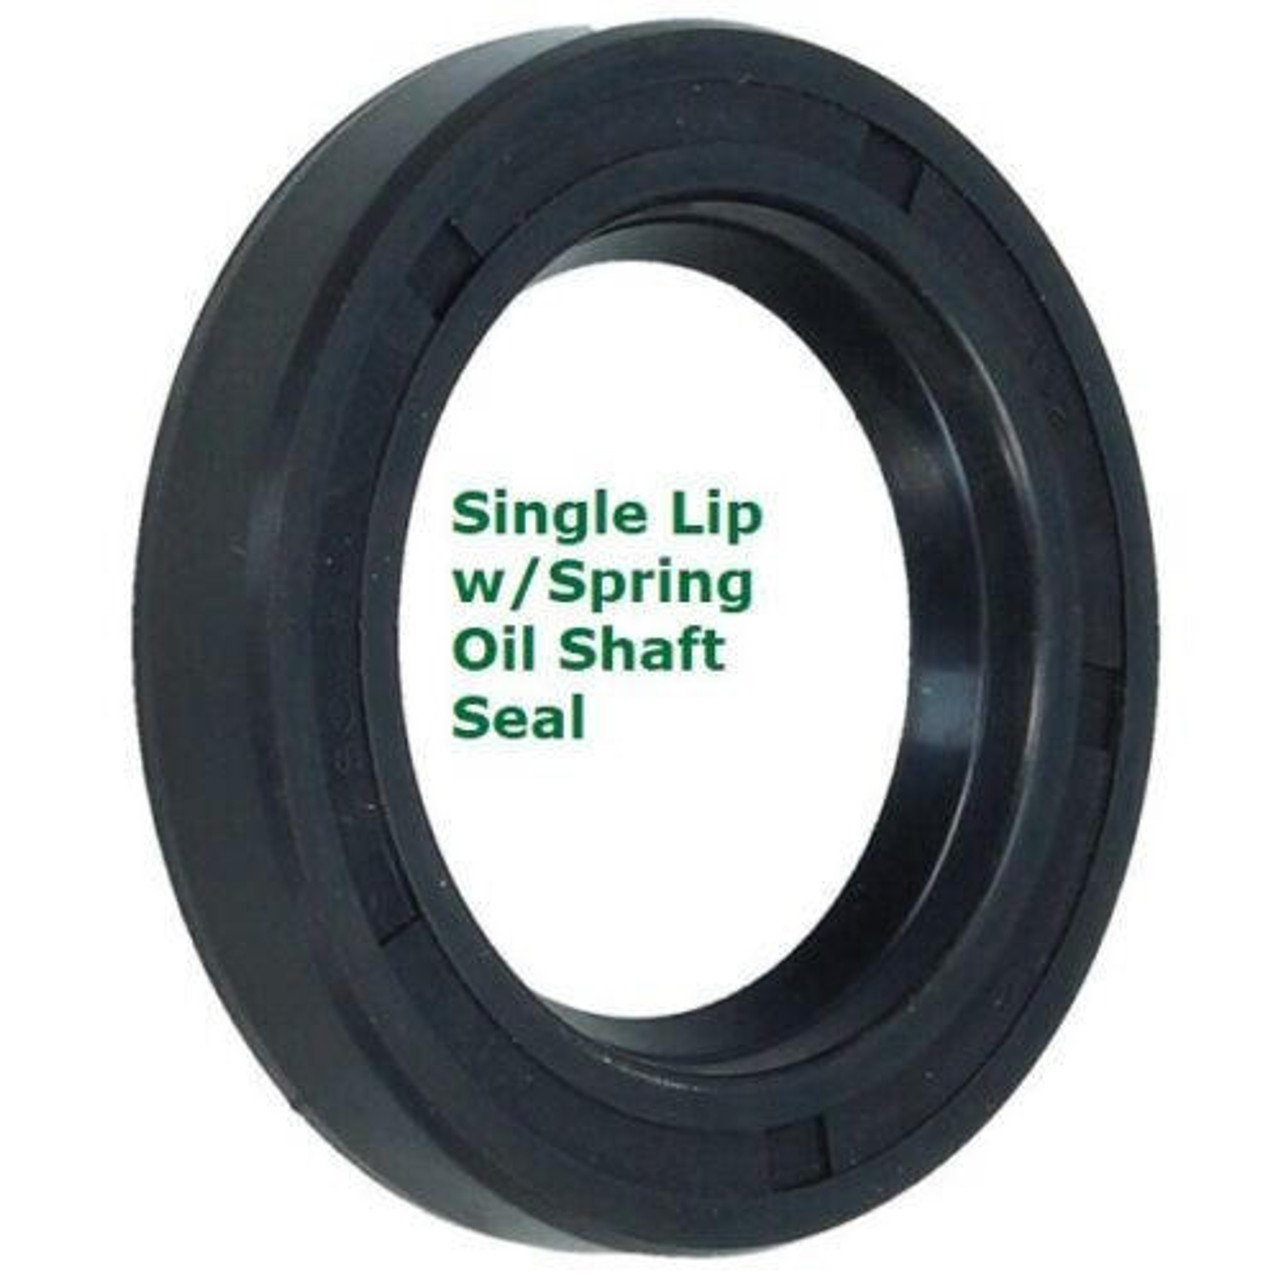 Metric Oil Shaft Seal 165 x 200 x 15mm   Single Lip   Price for 1 pc